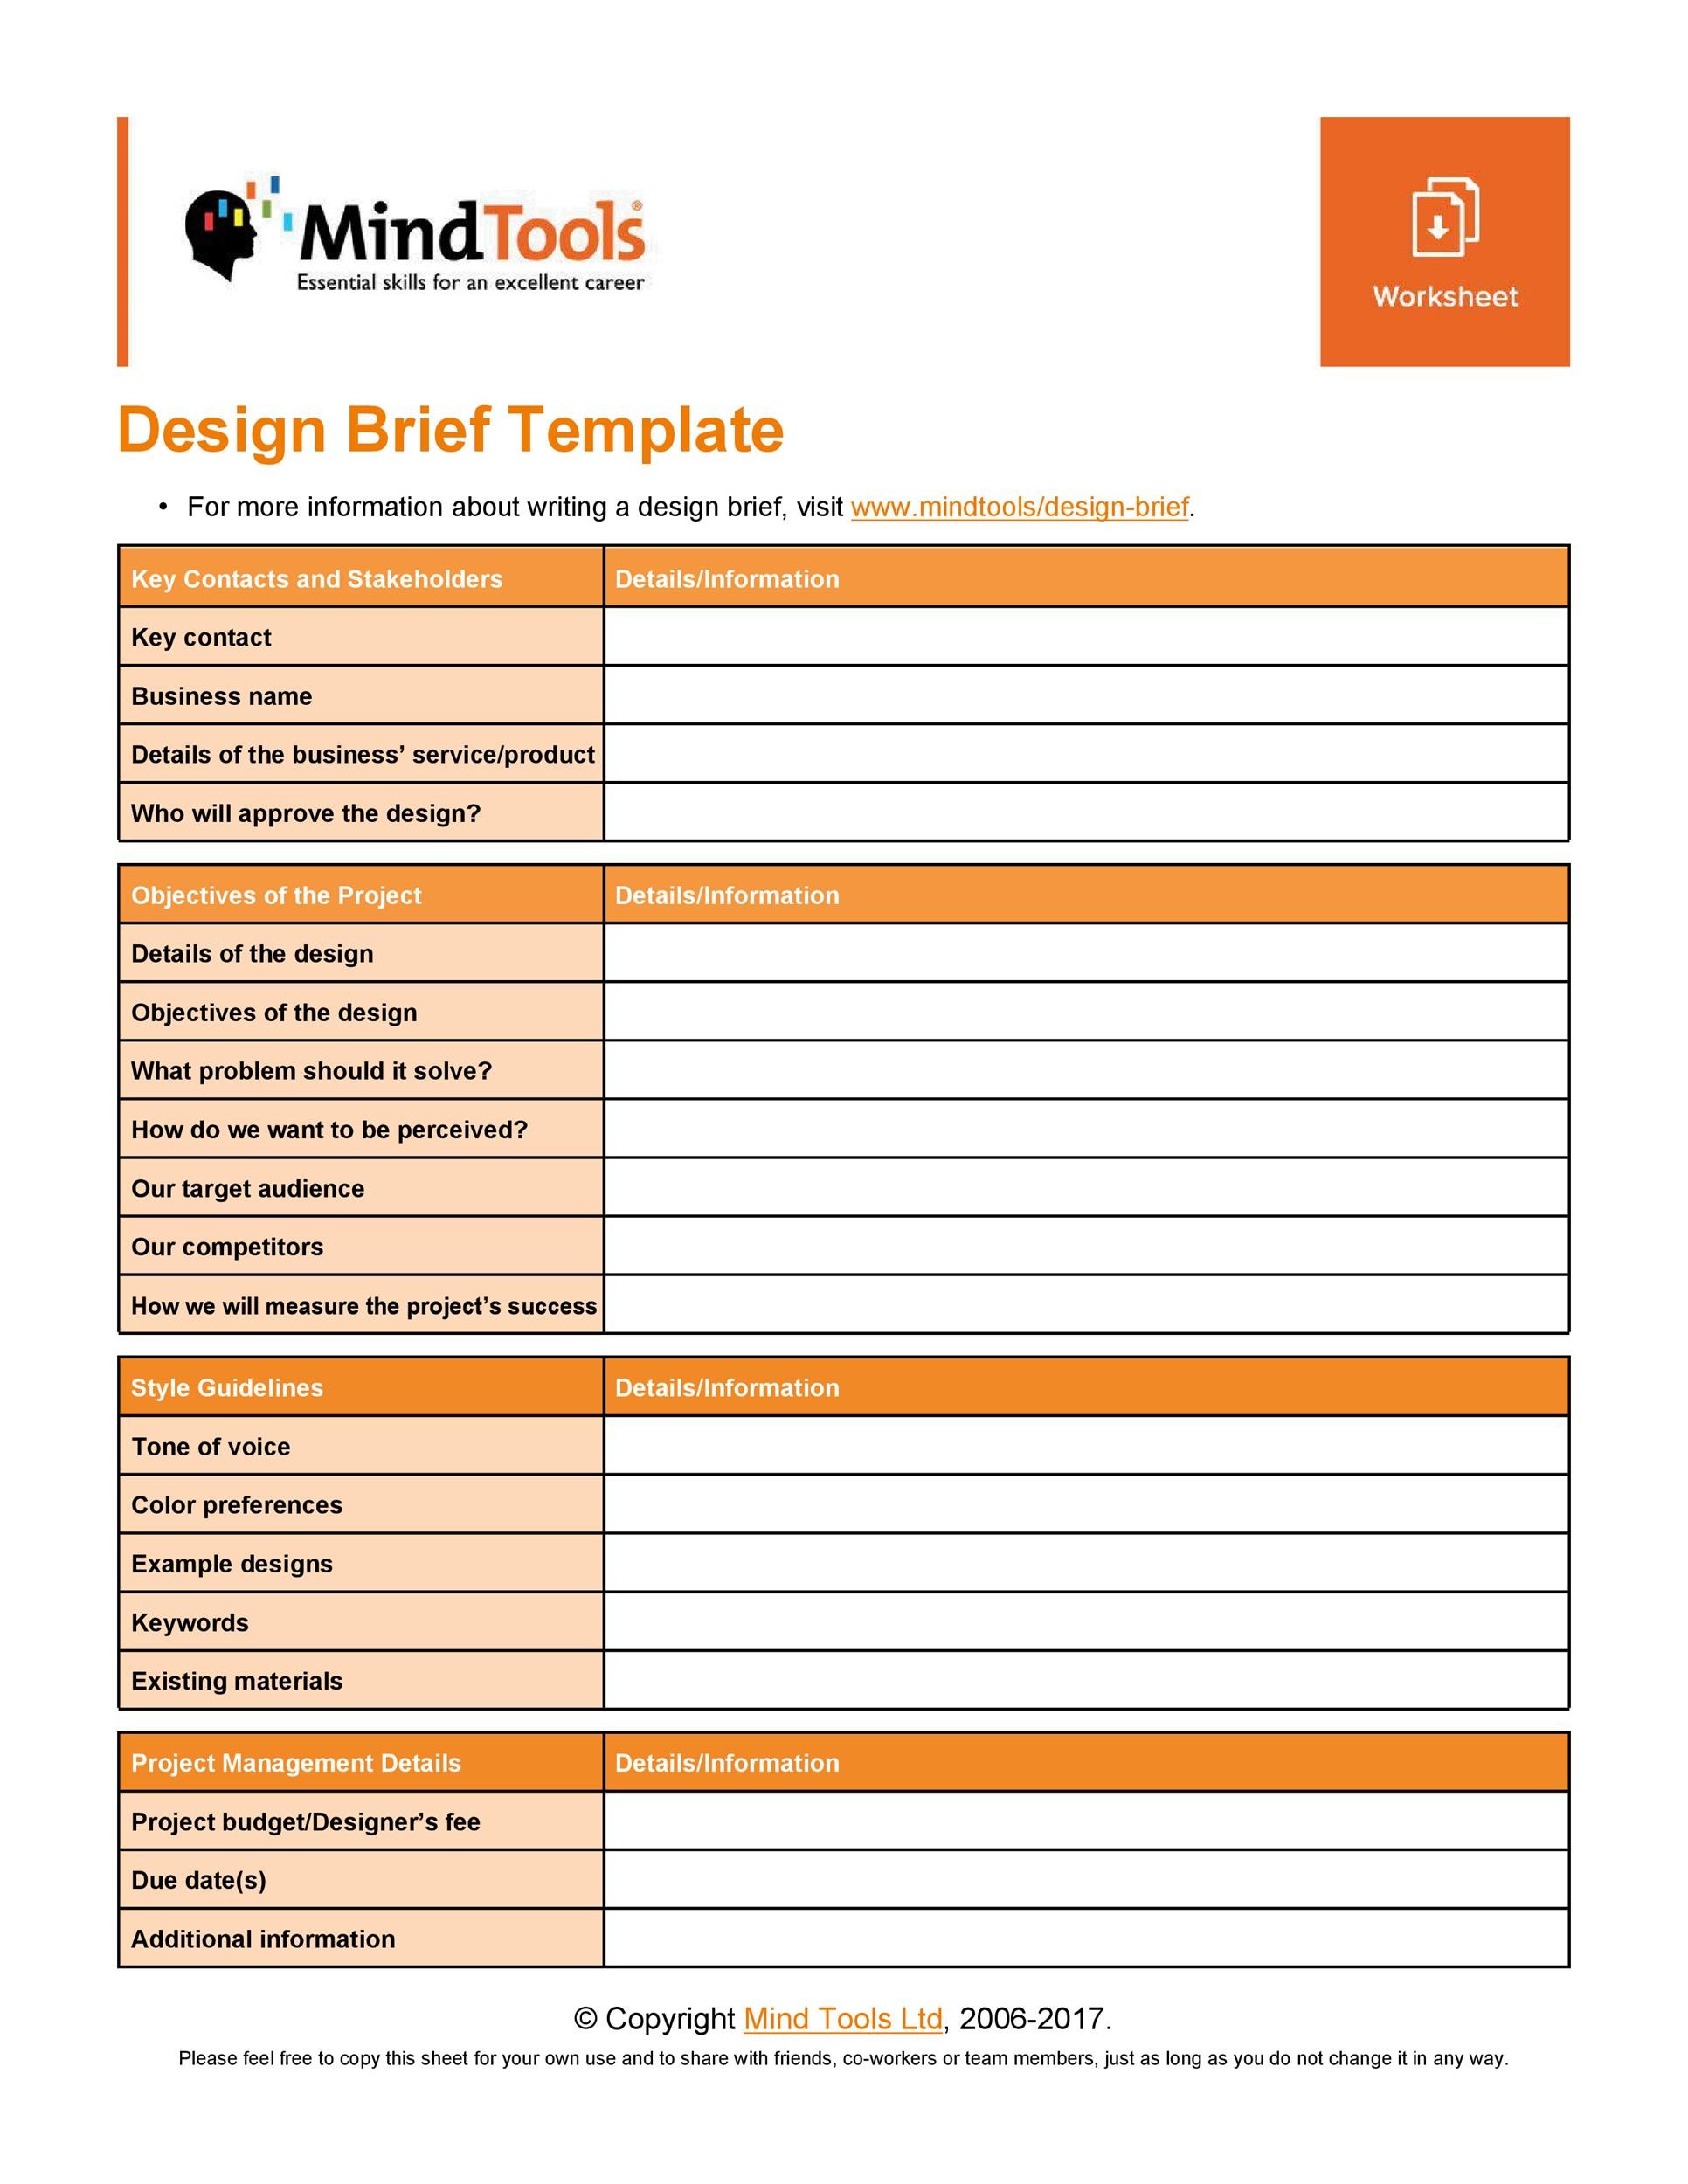 50 Useful Design Brief Templates (Free Creative Brief) ᐅ TemplateLab